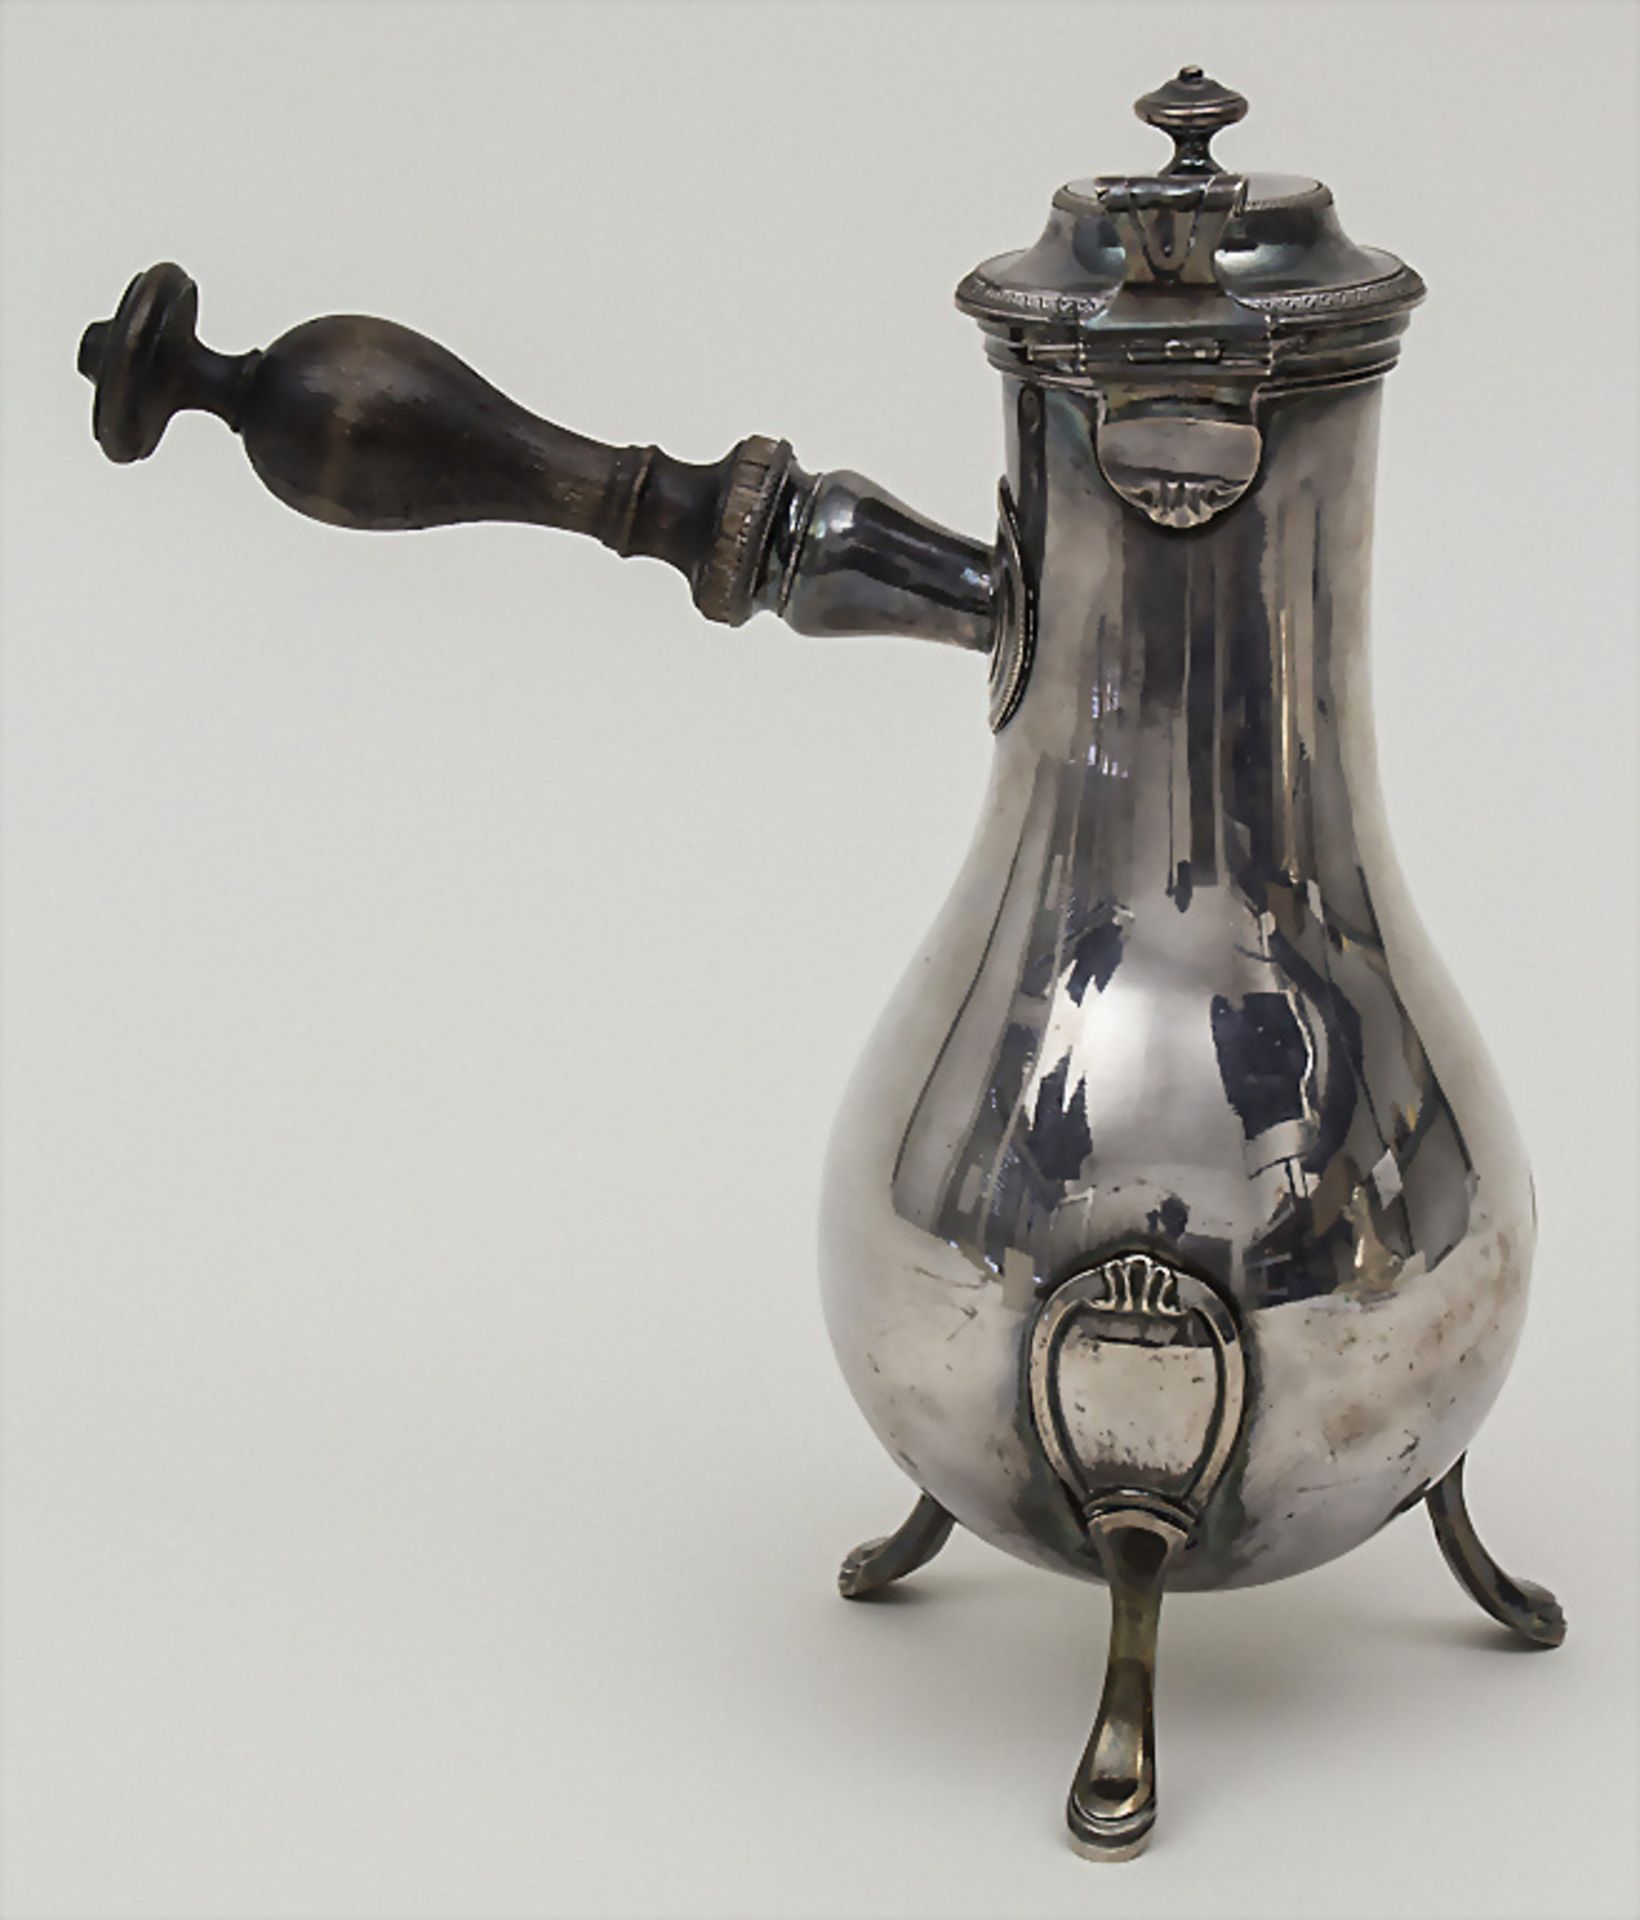 Empire Kanne / A silver Empire coffee pot, Nicolas-Richard Masson, Paris, 1806-1809 - Image 2 of 4